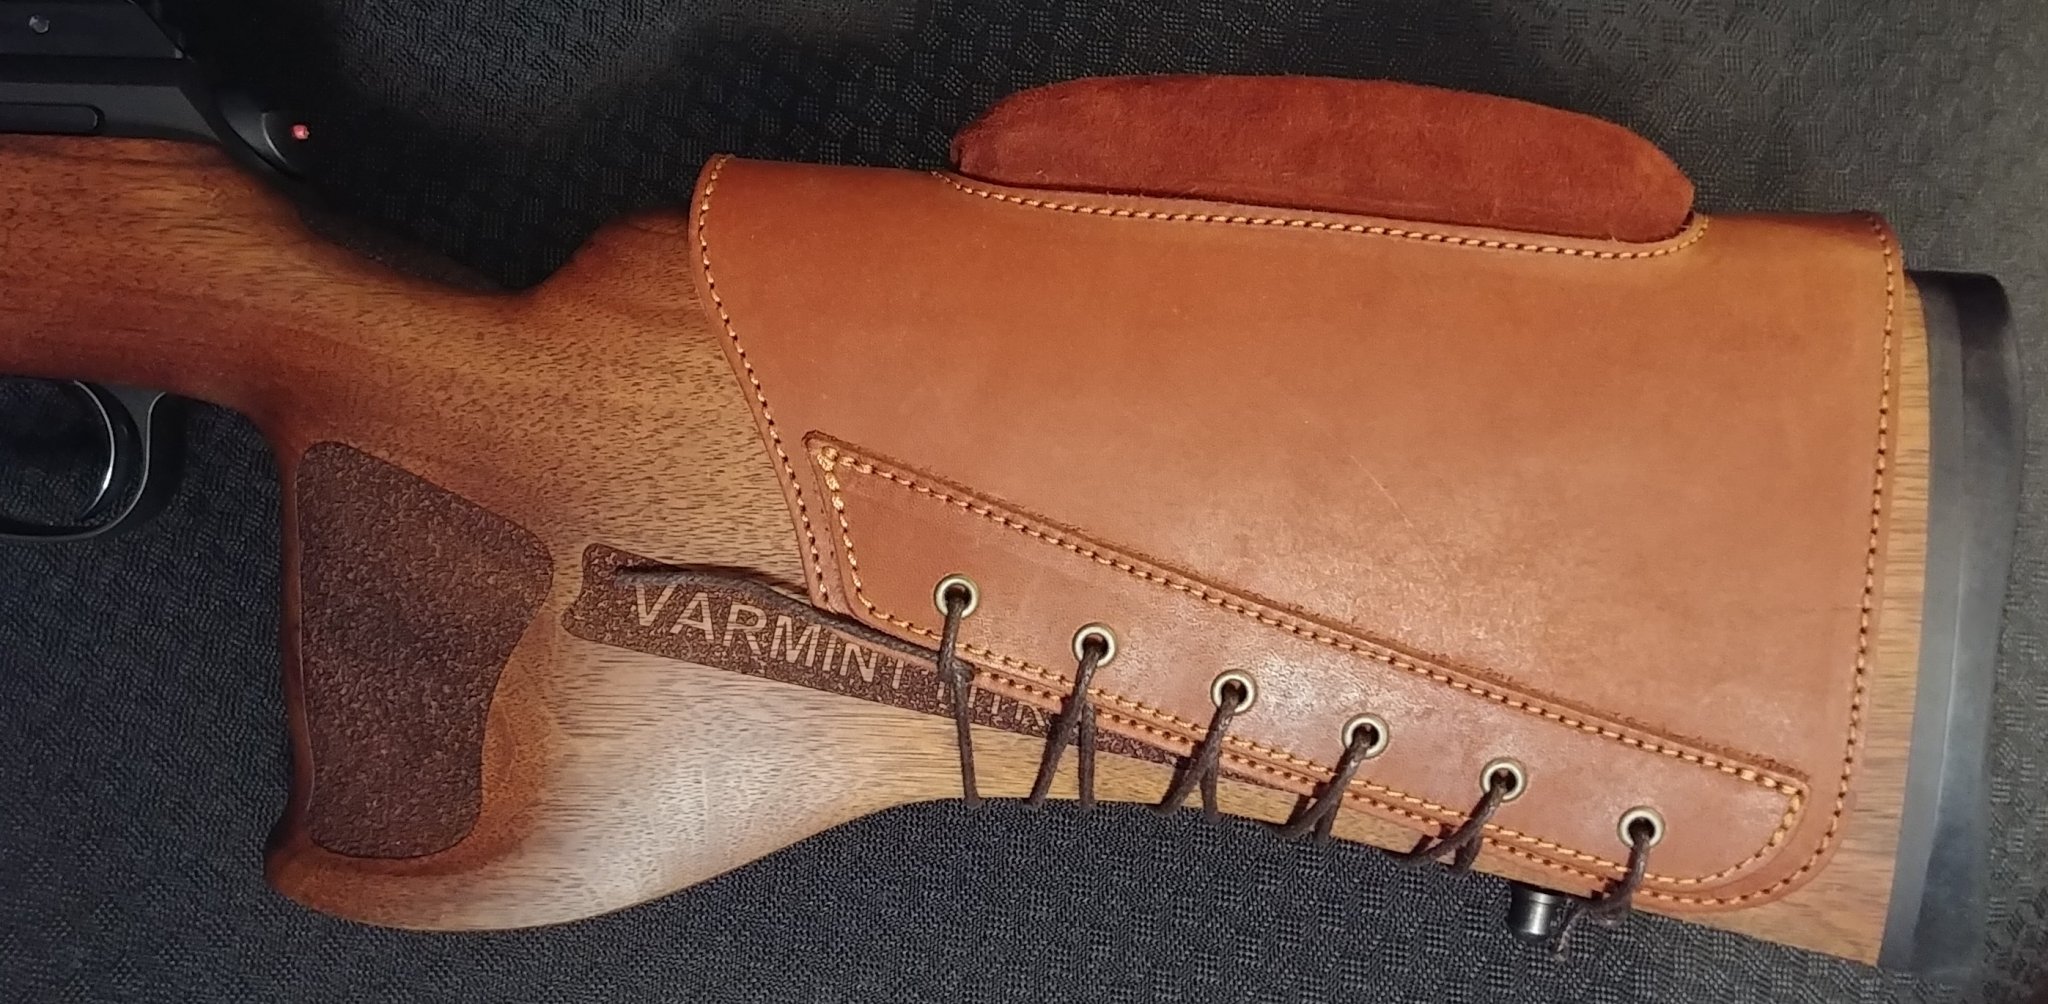 Amazon Leather Riser from Kvander.jpg